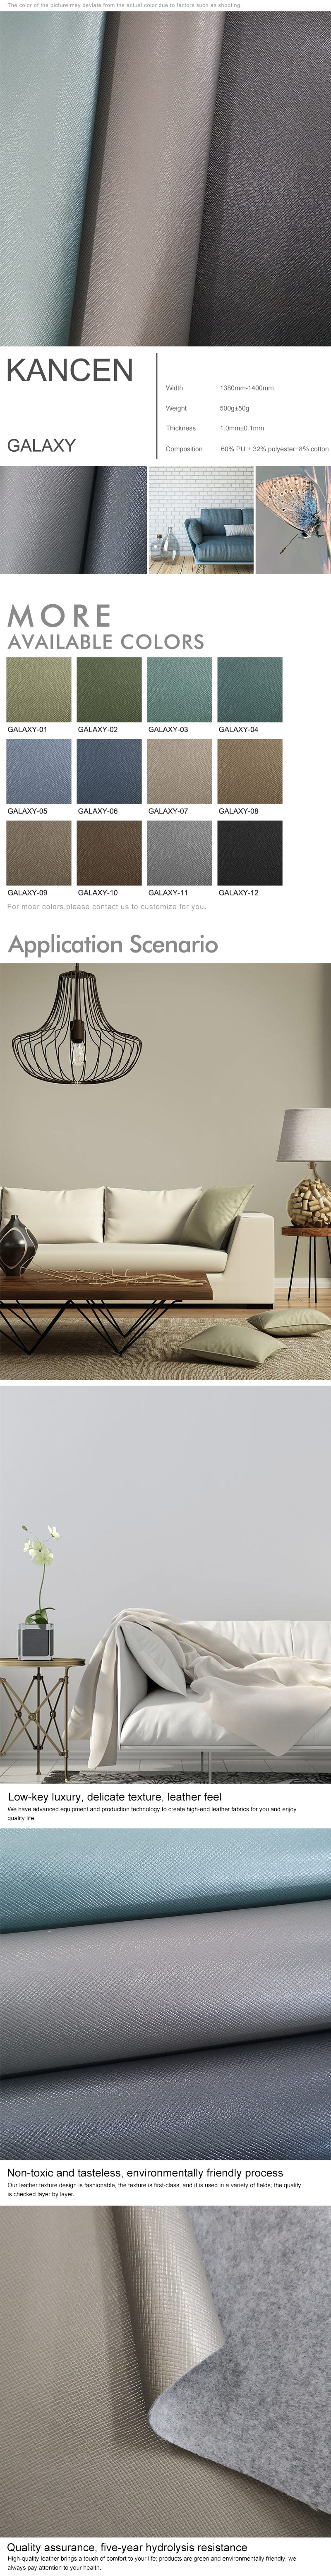 Water-based Sofa Leather design - KANCEN